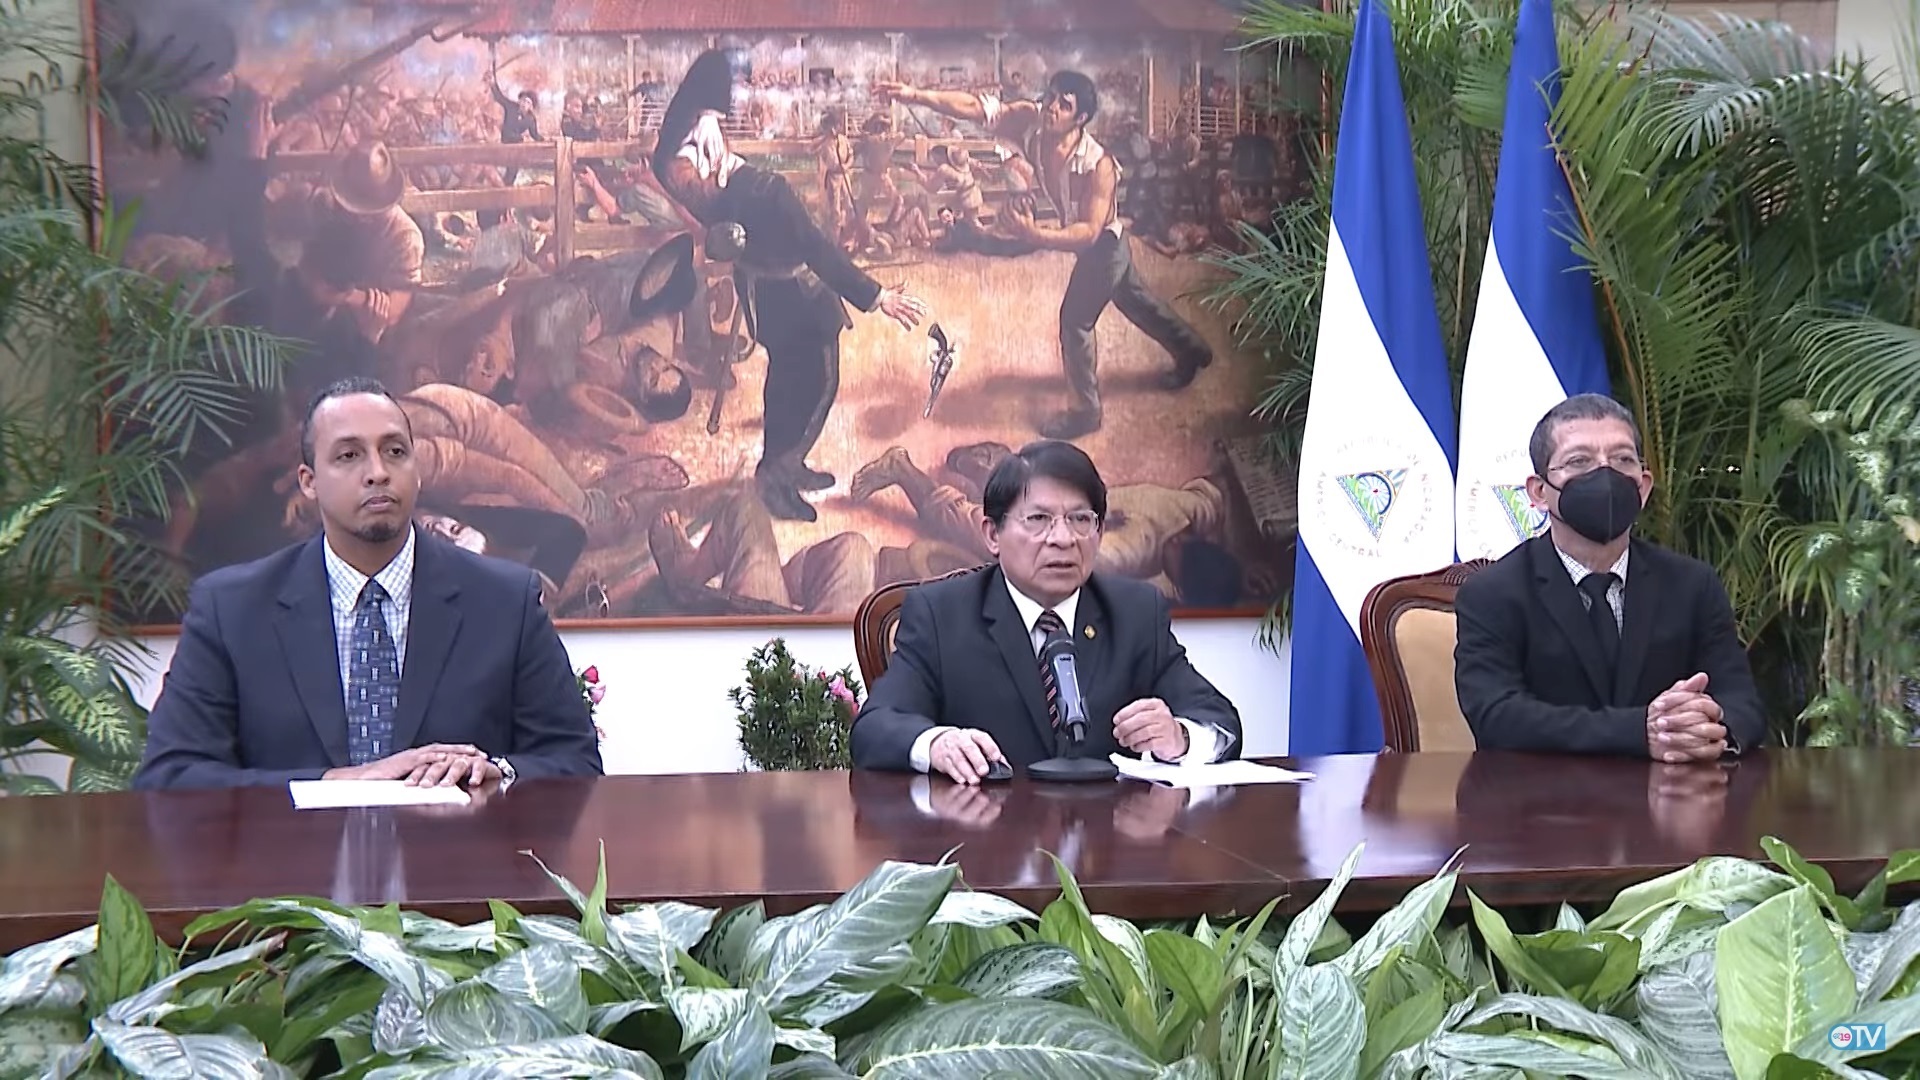 Nicaragua Sandinista expels OAS colonies